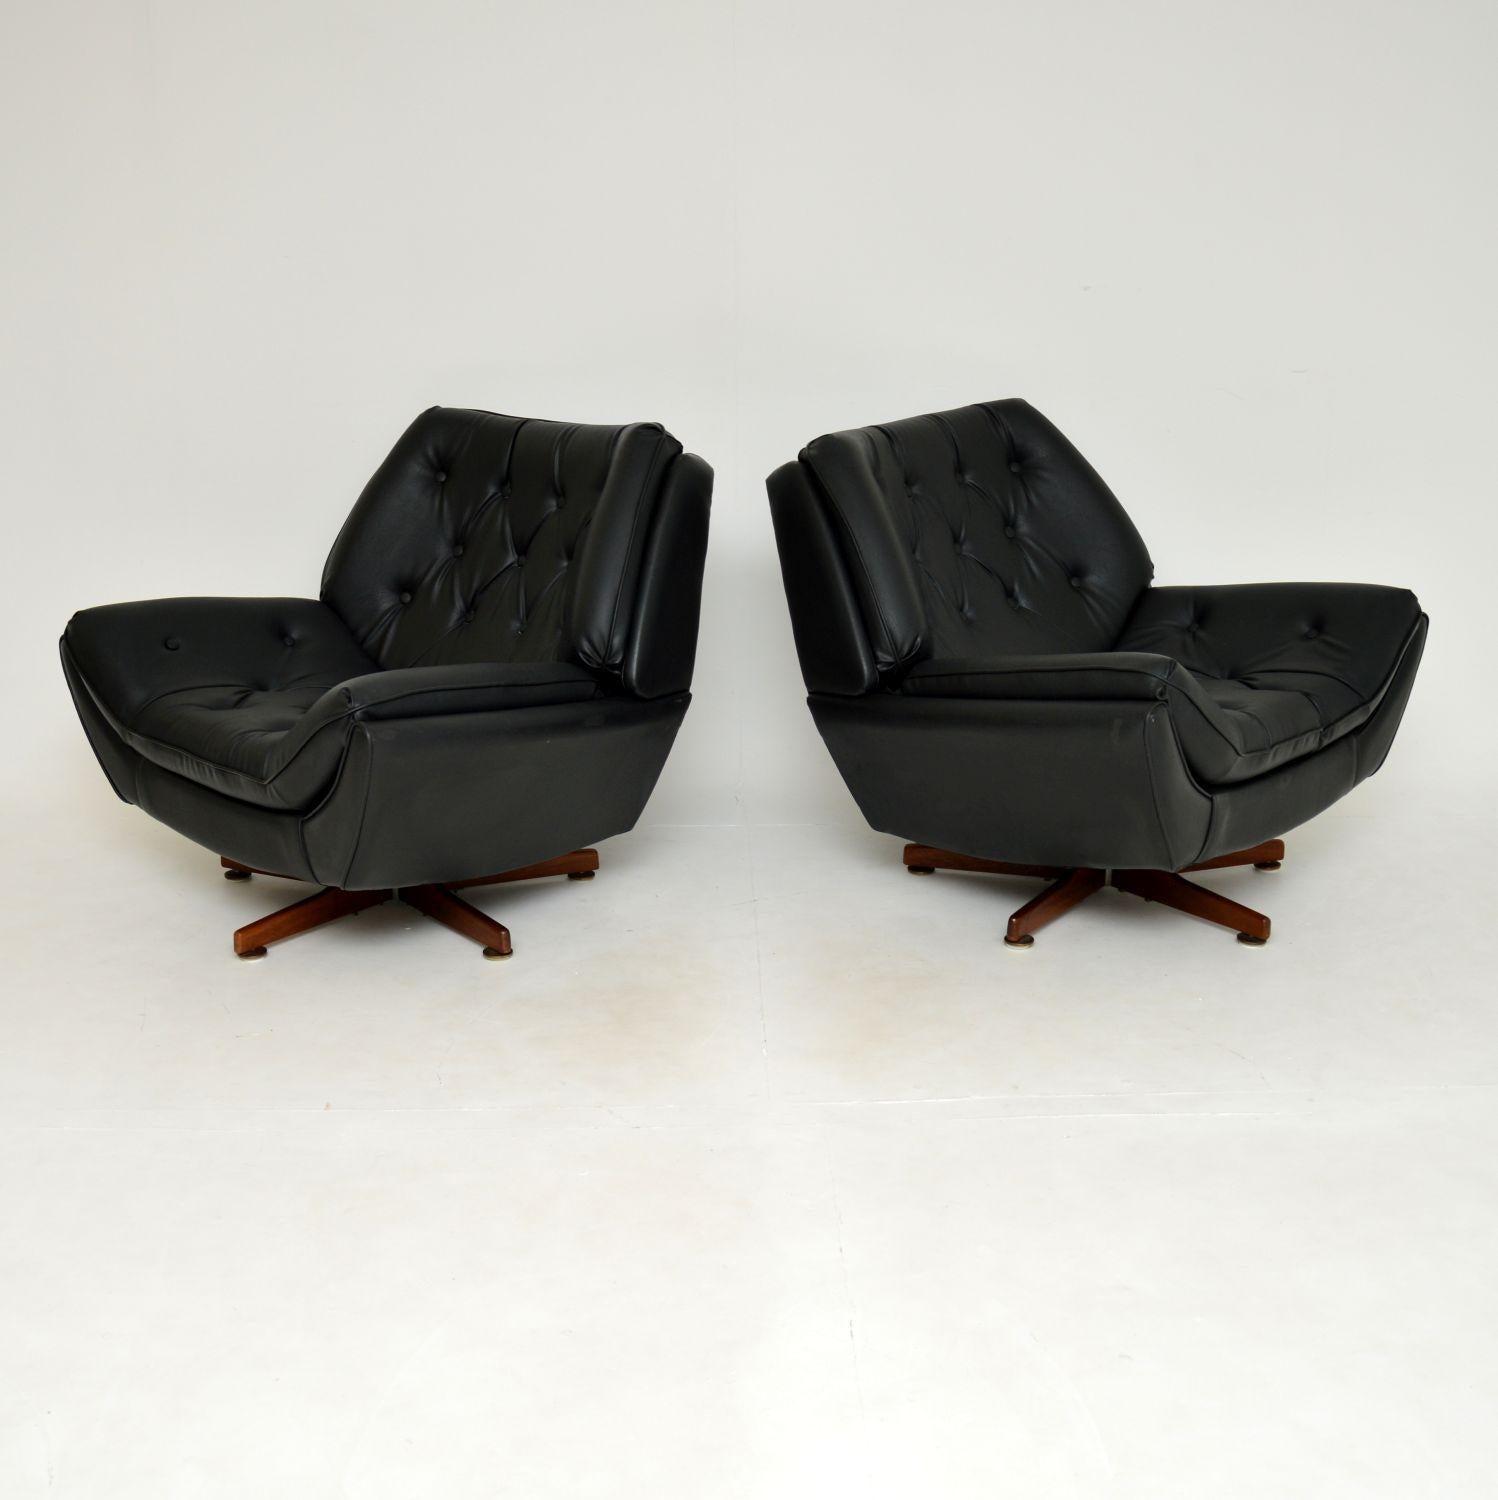 60s swivel chair